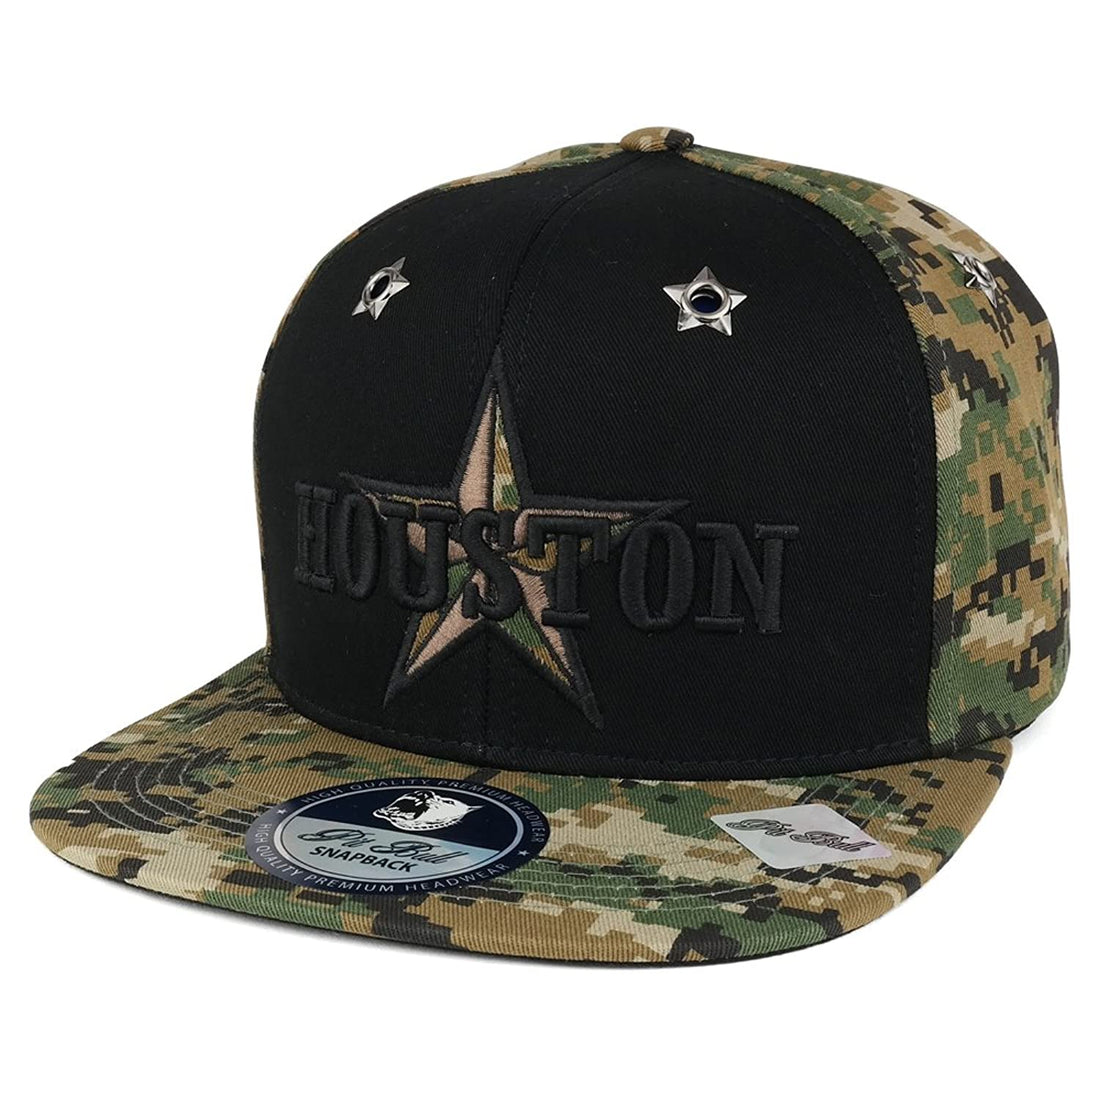 Trendy Apparel Shop Houston Star 3D Embroidered Military Digital Camo Printed Flat Bill Snapback Cap